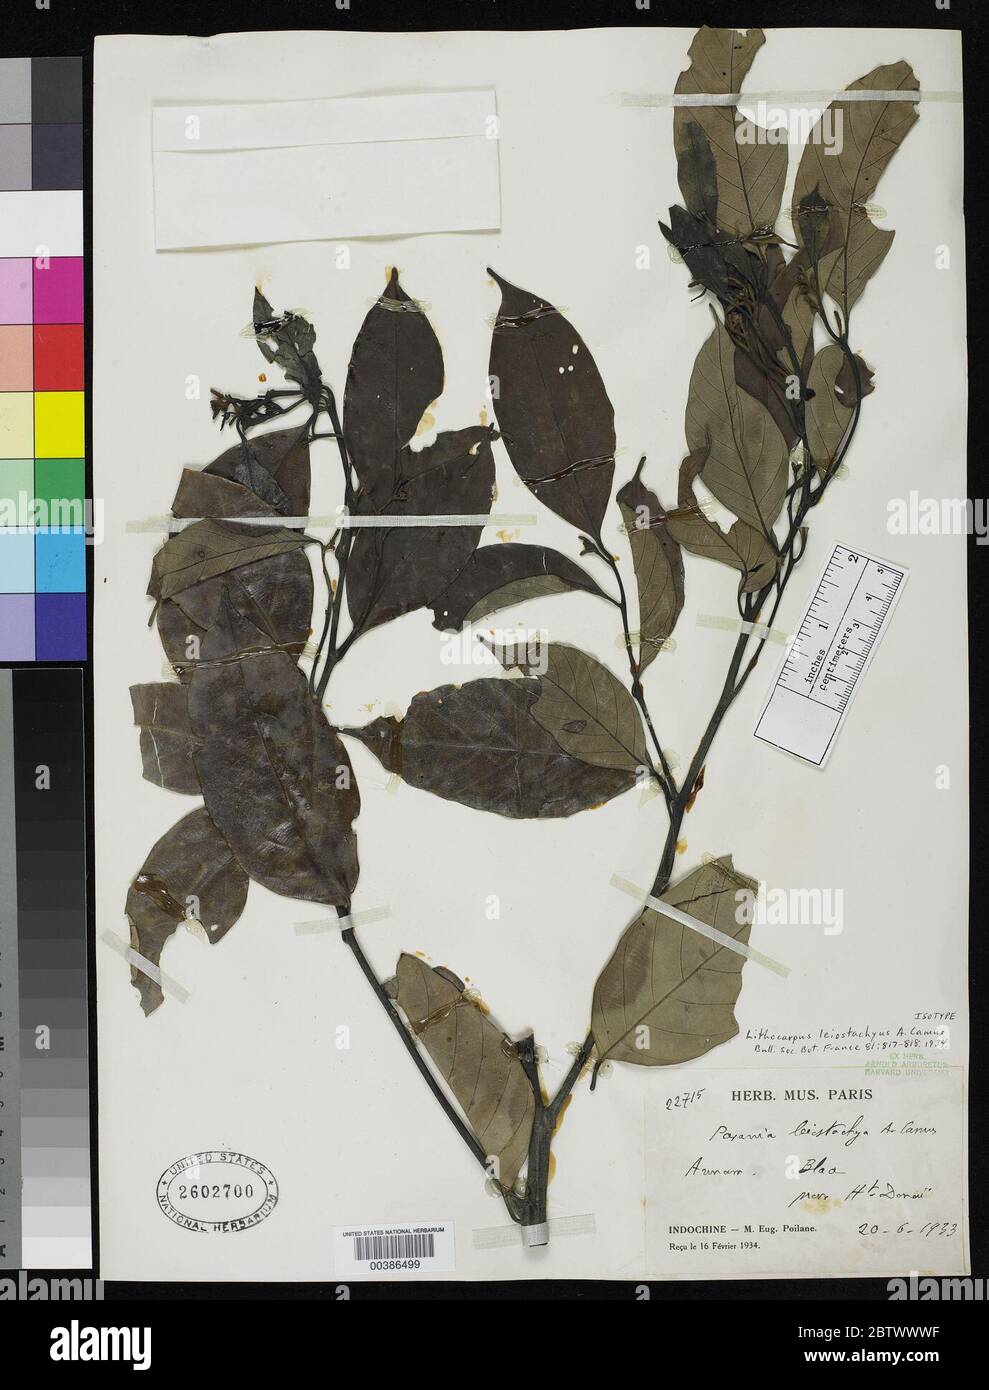 Lithocarpus leiostachyus A Camus. Stock Photo